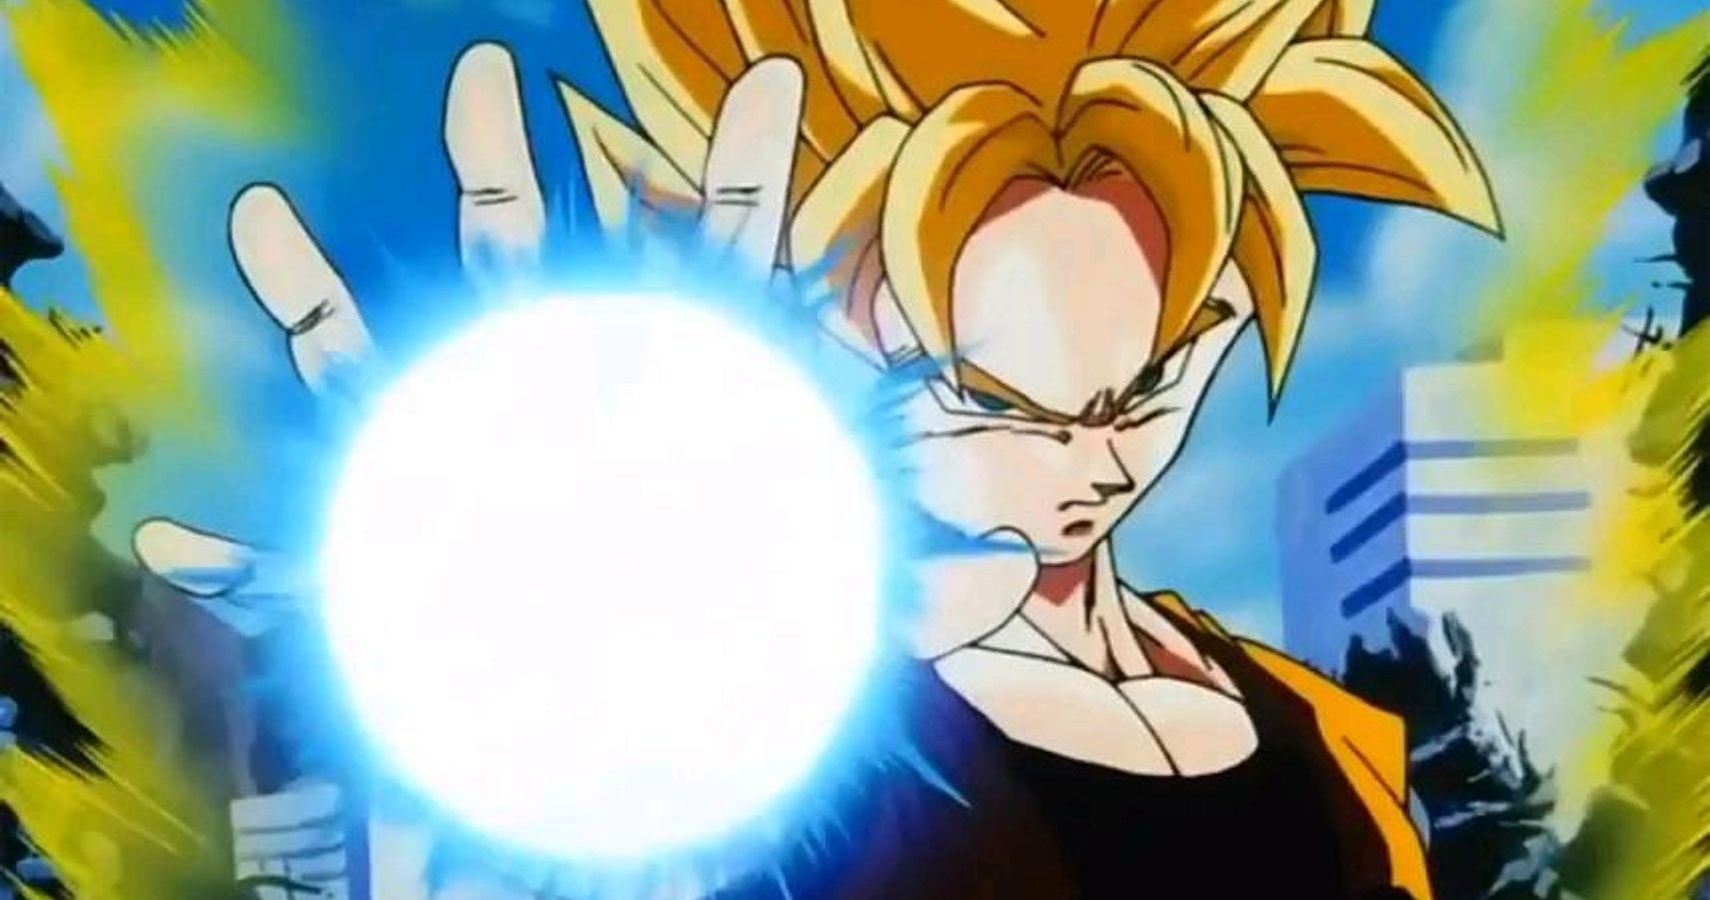 Dragon Ball Goku S 10 Best Moves Ranked According To Strength - super saiyan blue kaioken goku s wrath roblox dragon ball rage